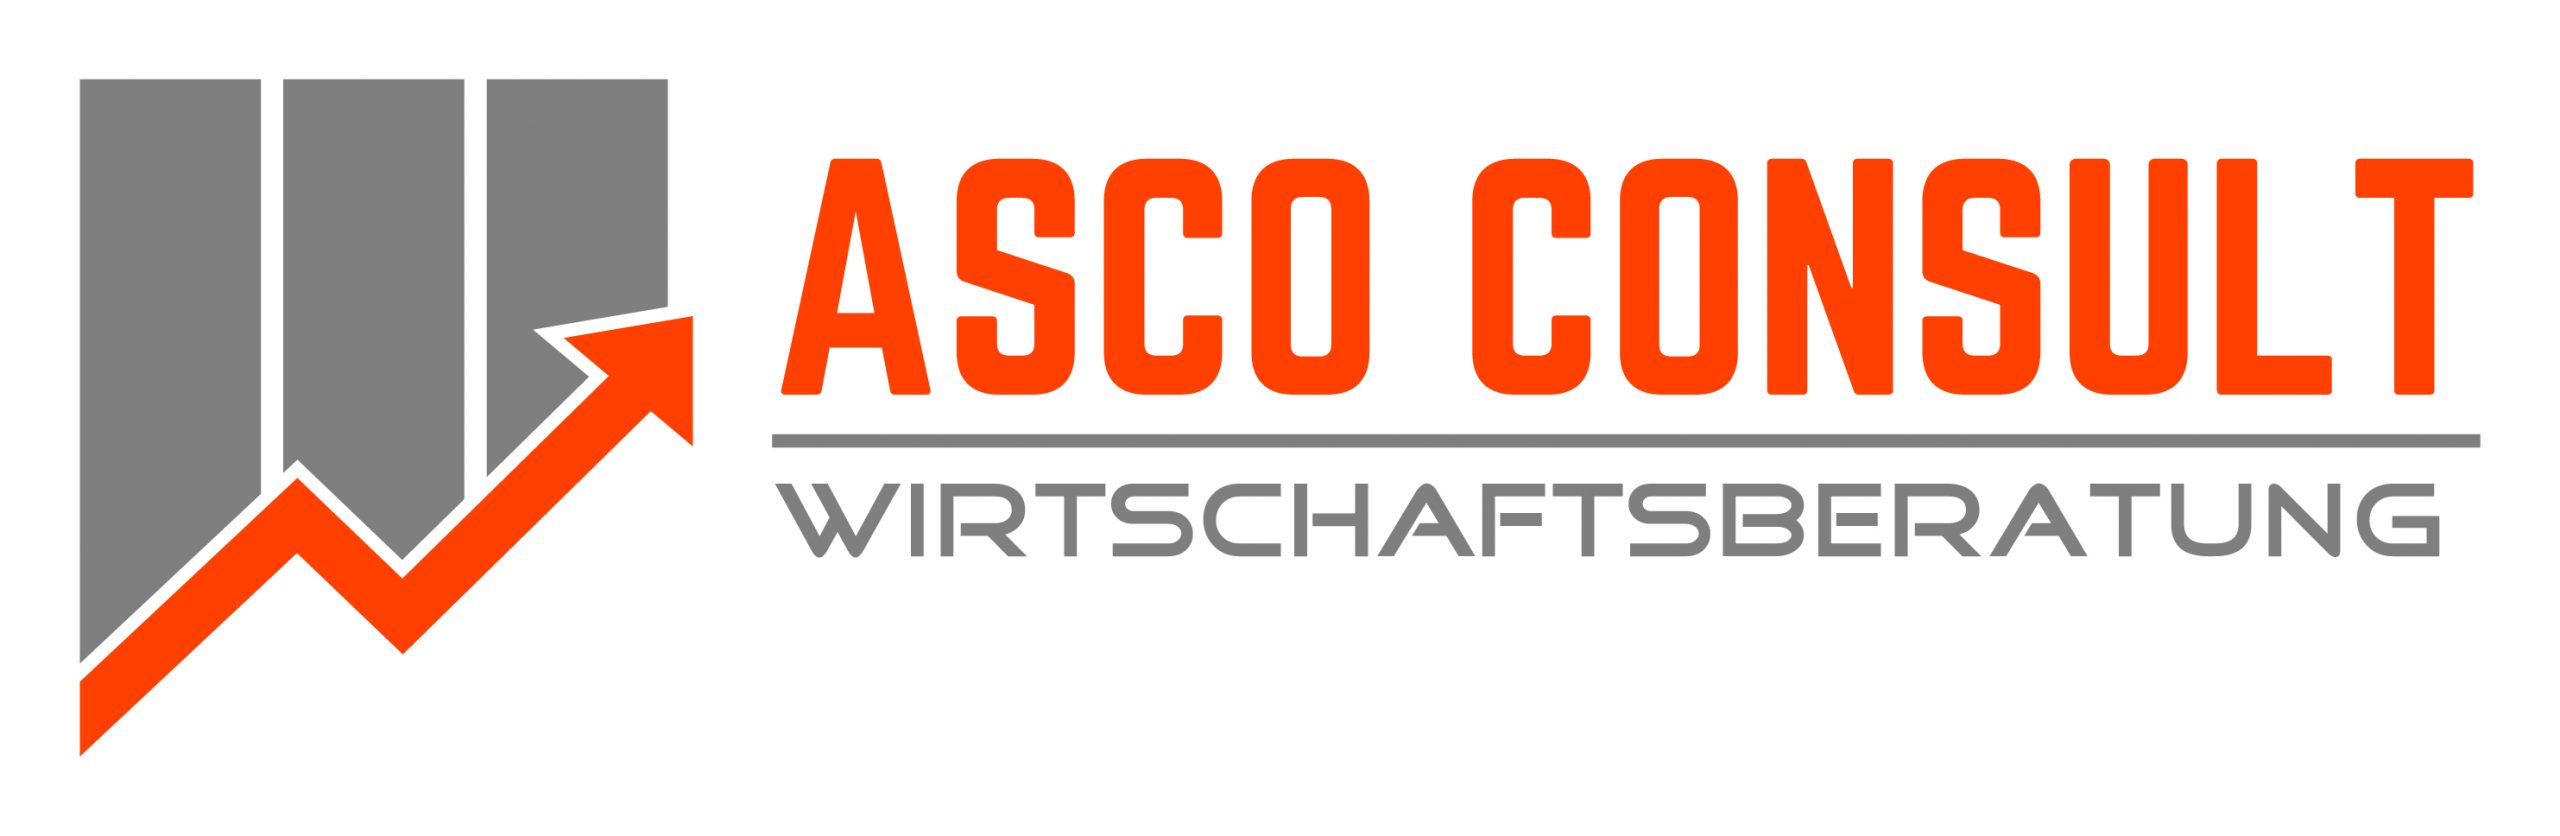 Partnerlogo der Asco Consulting